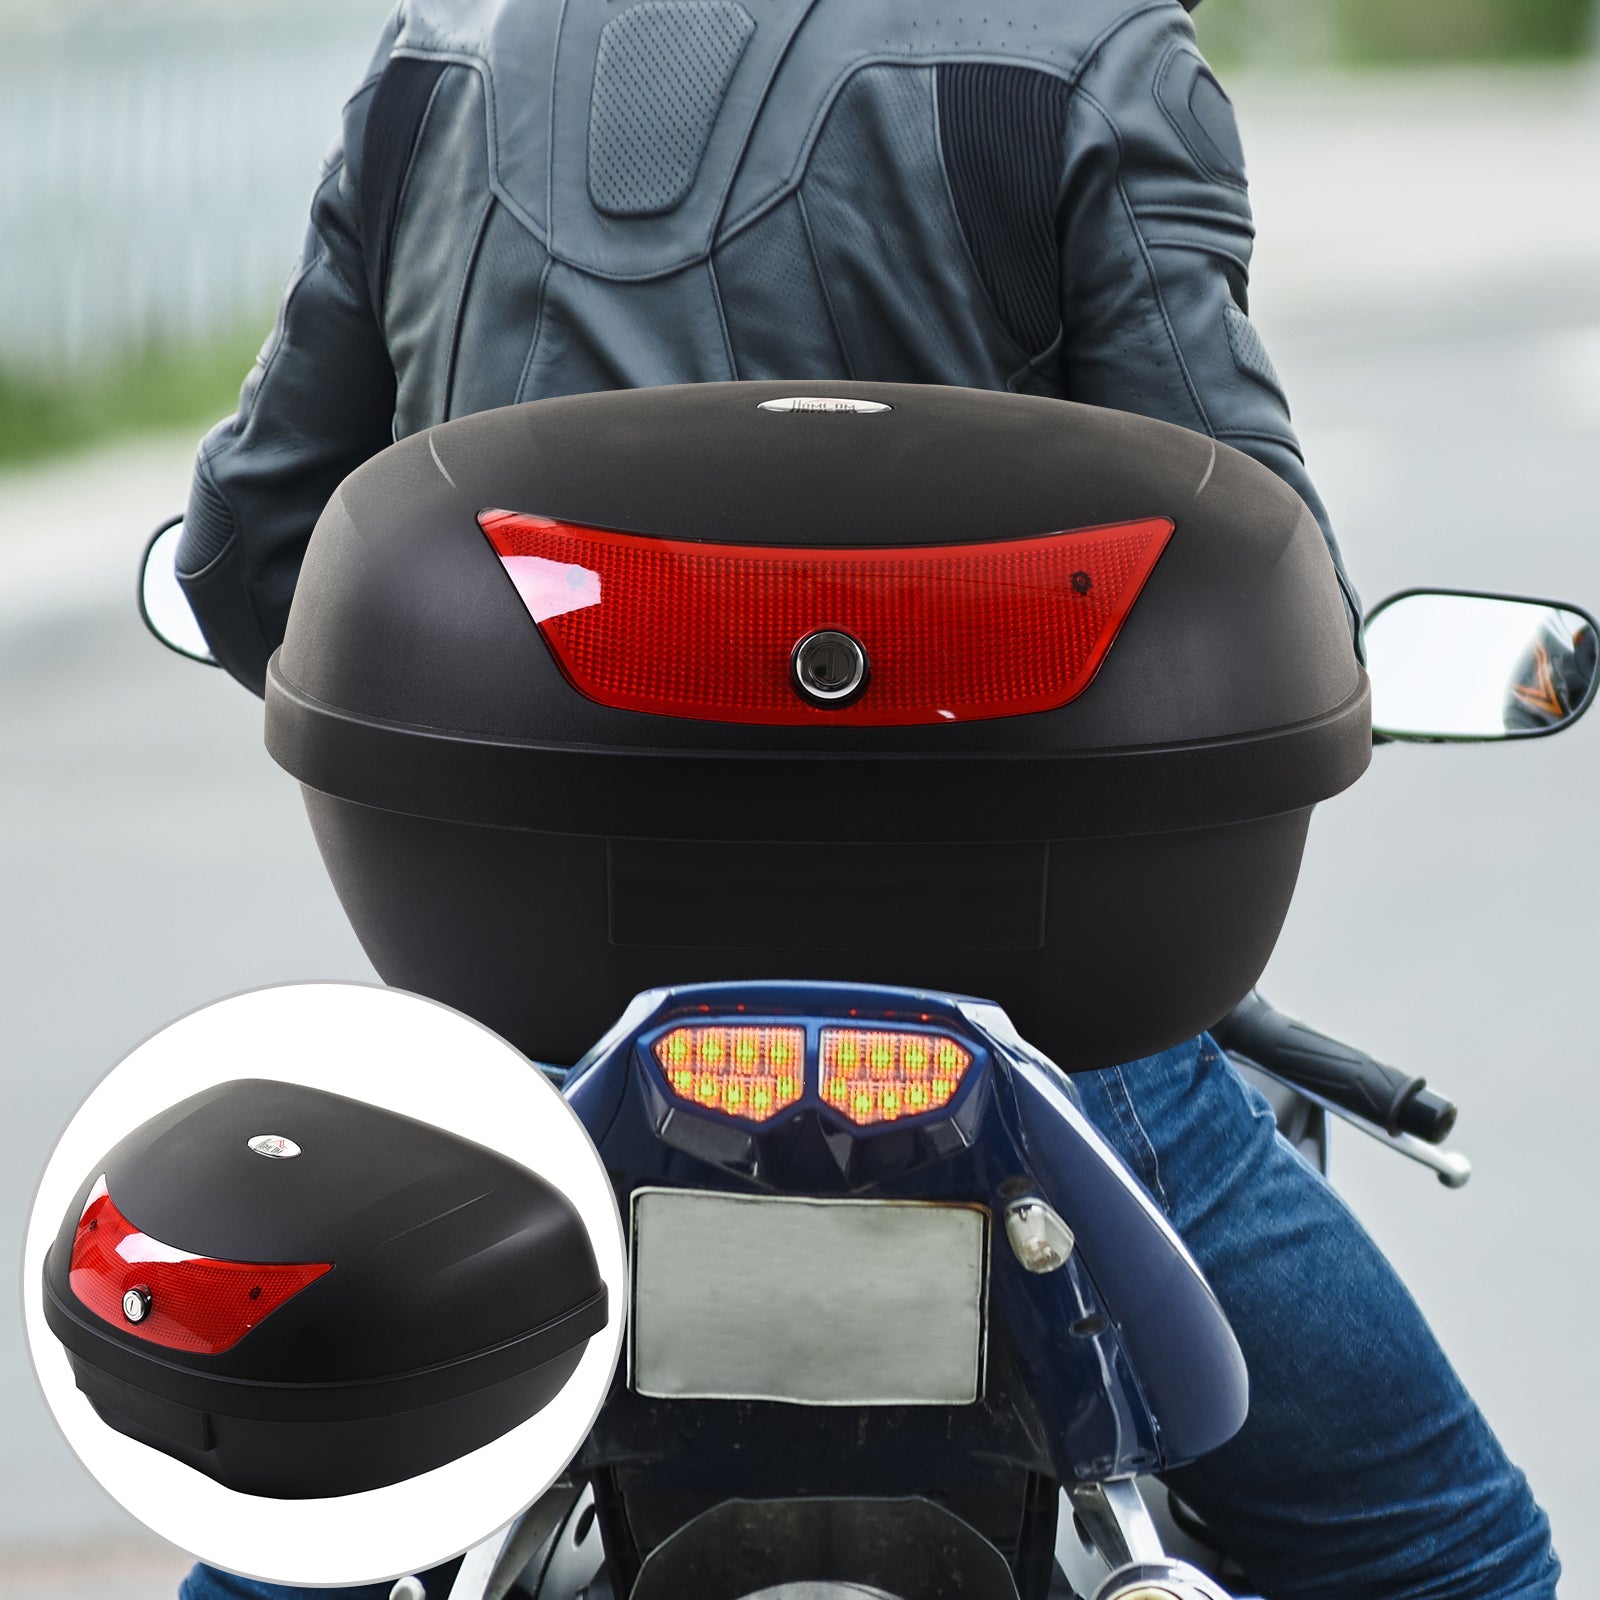 48L Motorcycke Trunk Travel Luggage Storage Box, Can Store Helmet-1